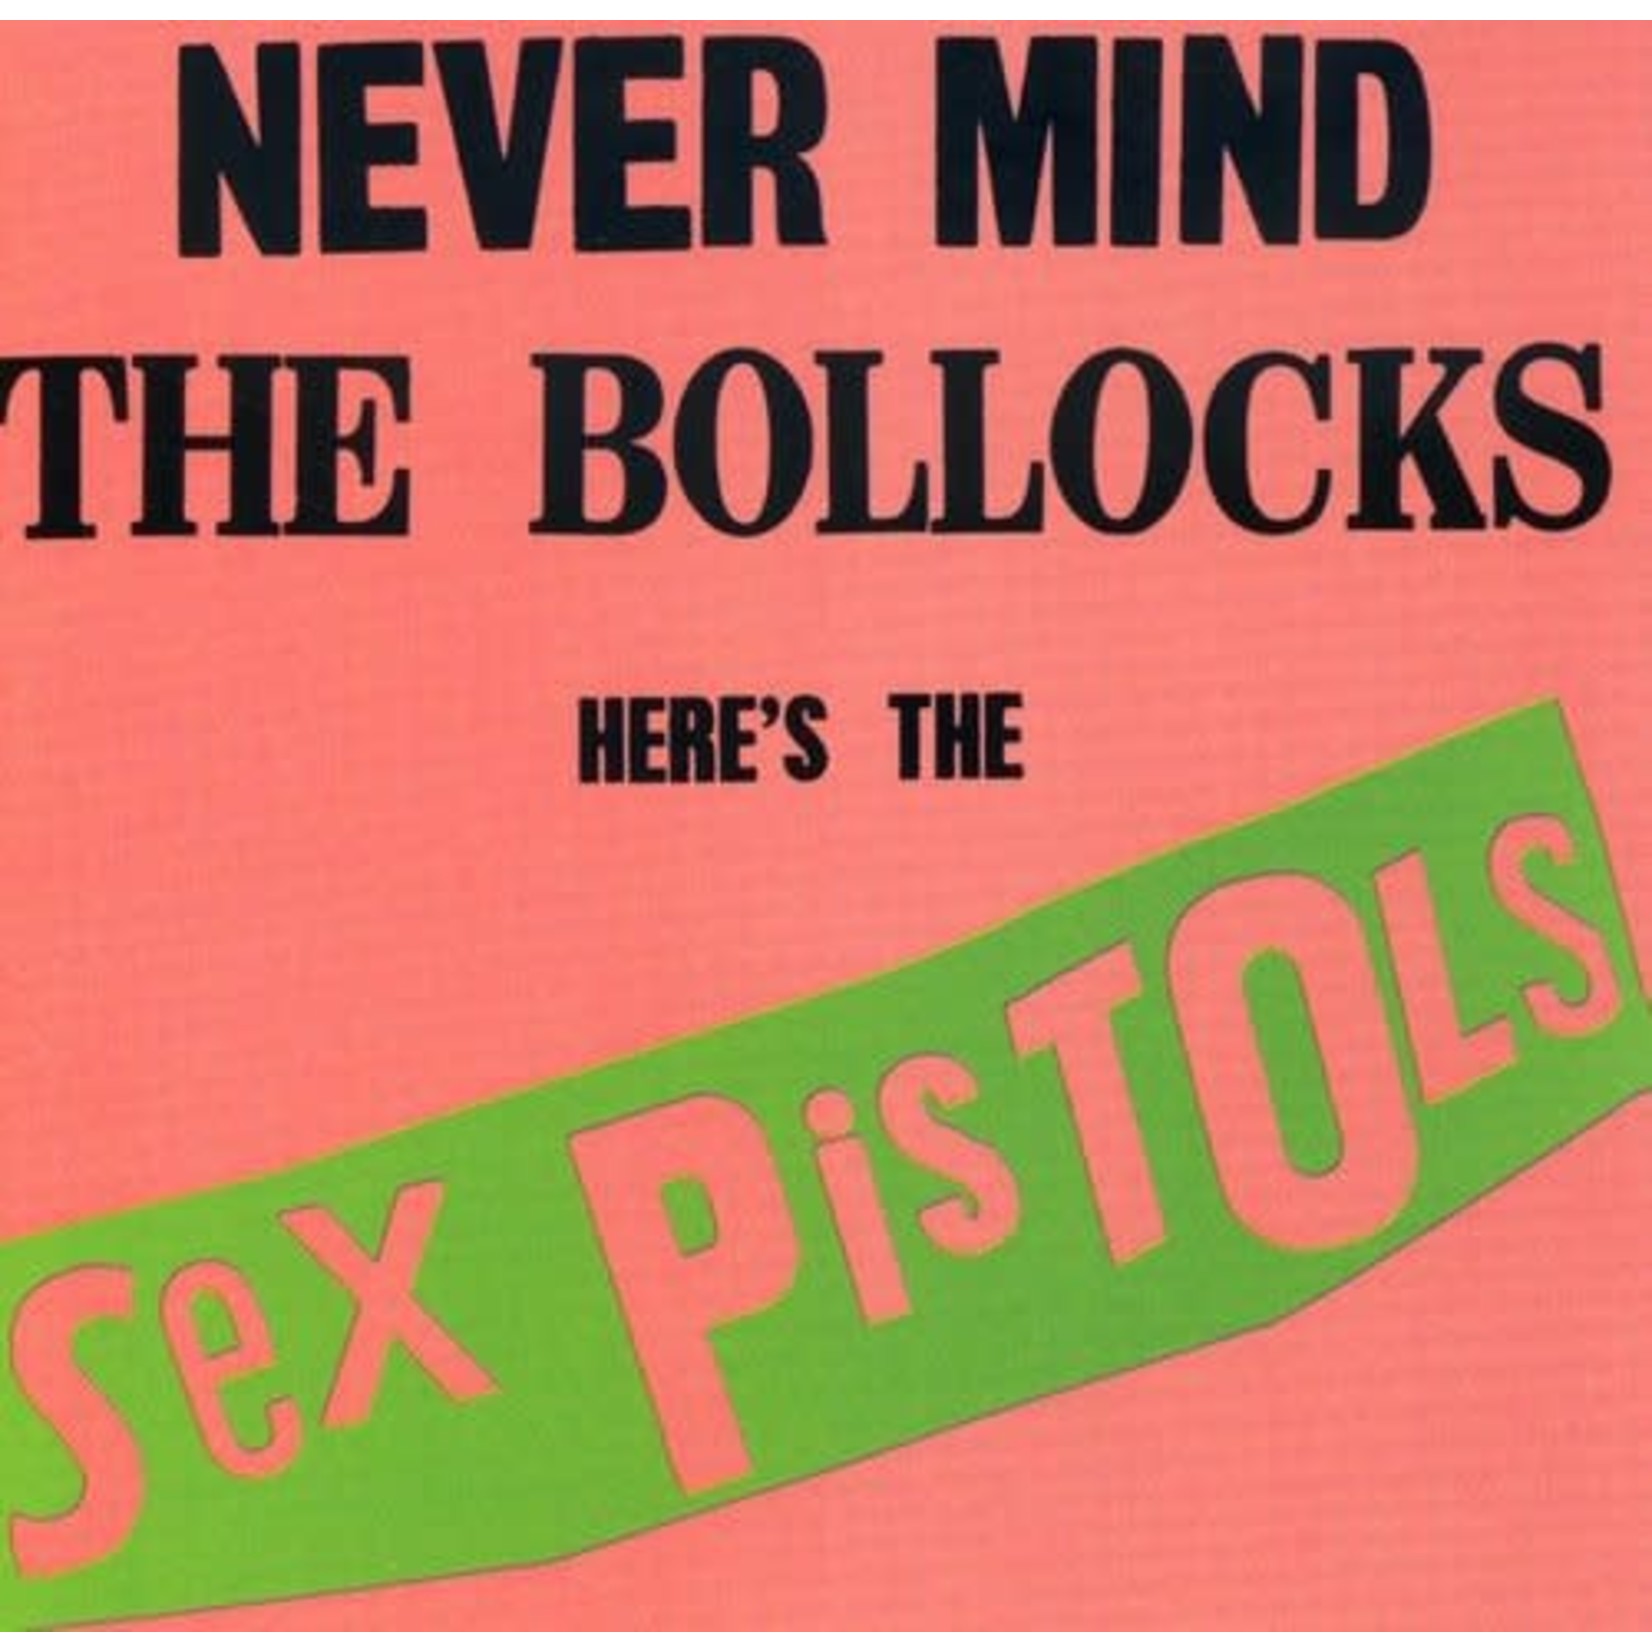 Sex Pistols - Never Mind The Bollocks [CD]